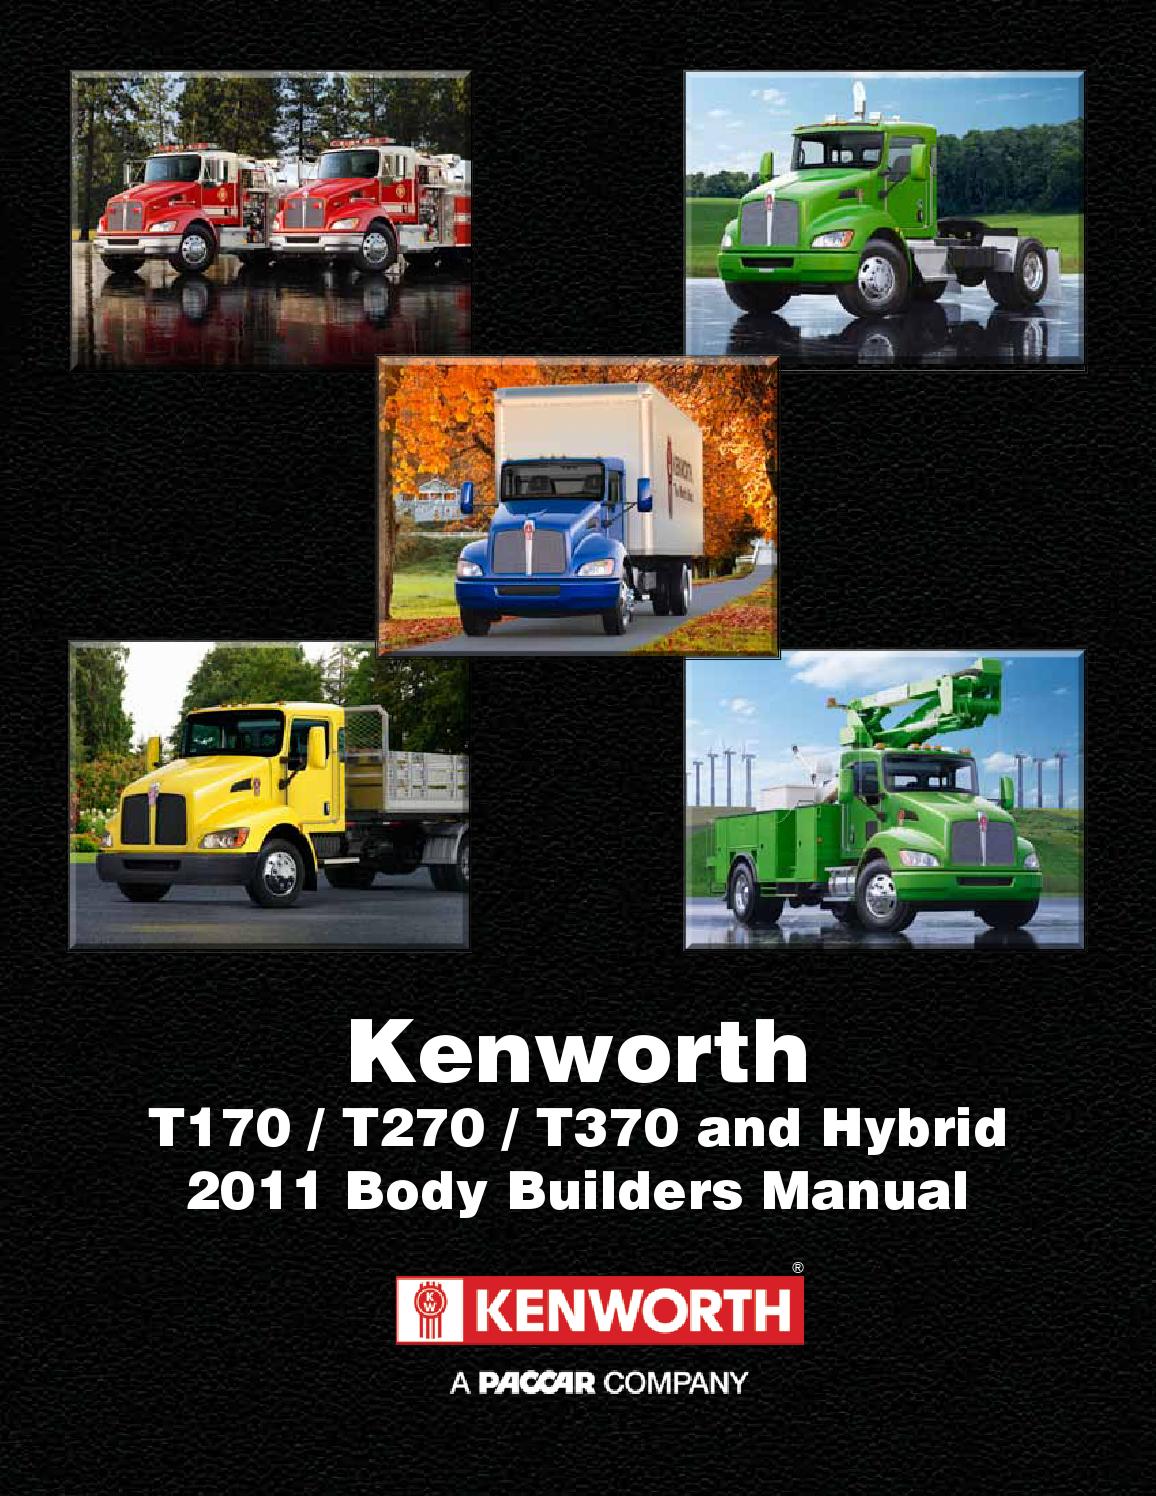 Kenworth t800 body builder manual